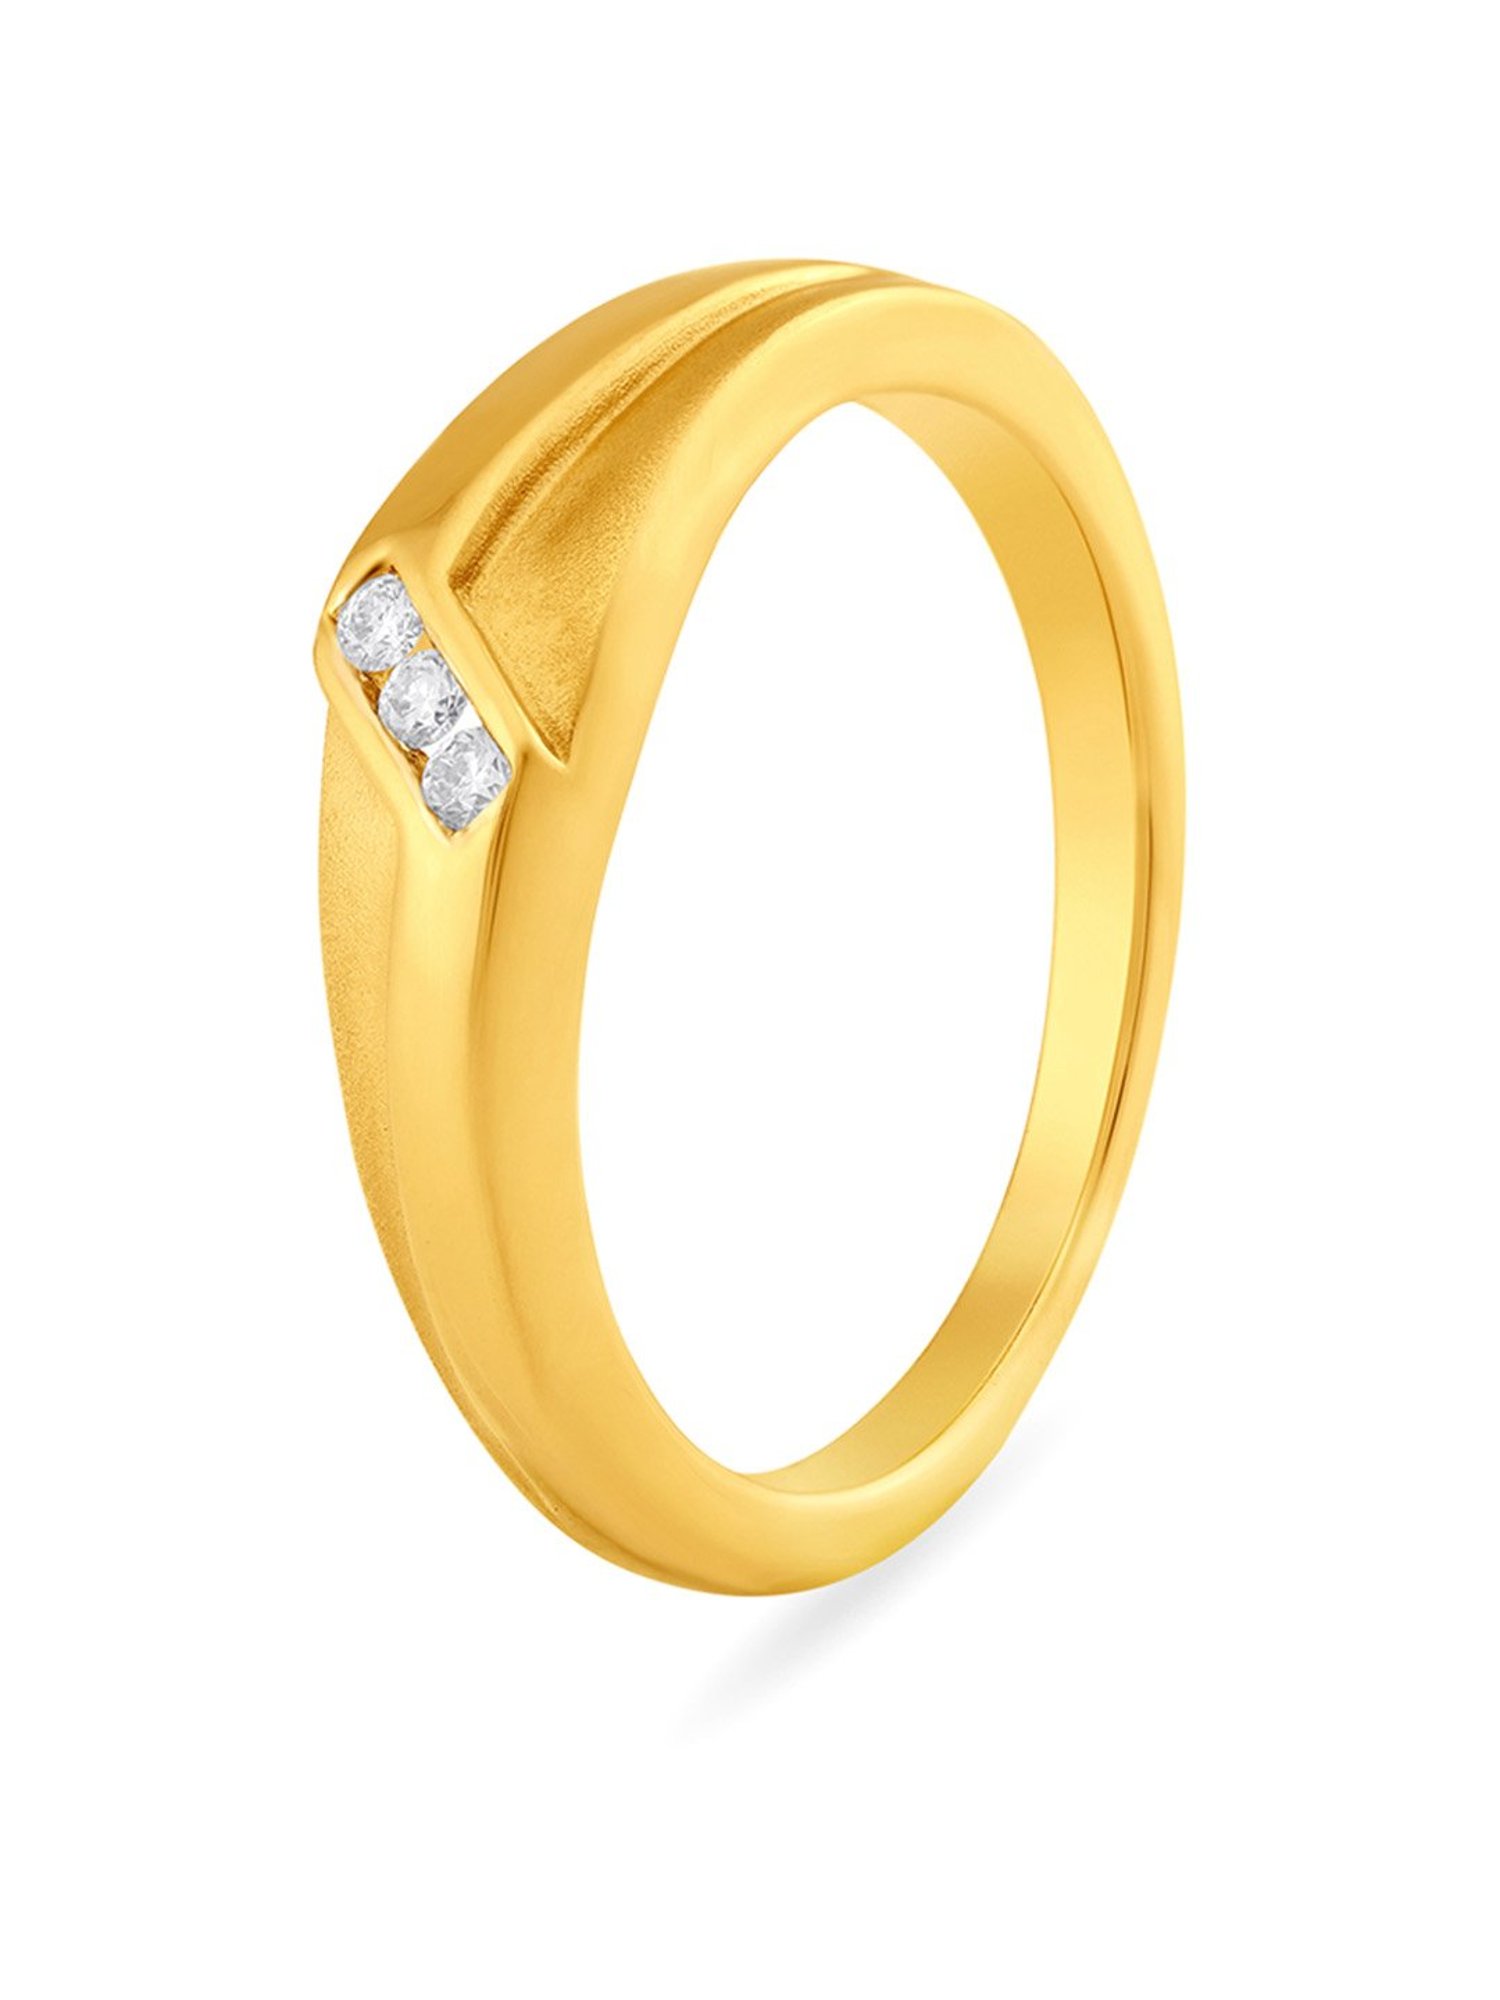 Minimalist 18 Karat Yellow Gold And Diamond Finger Ring